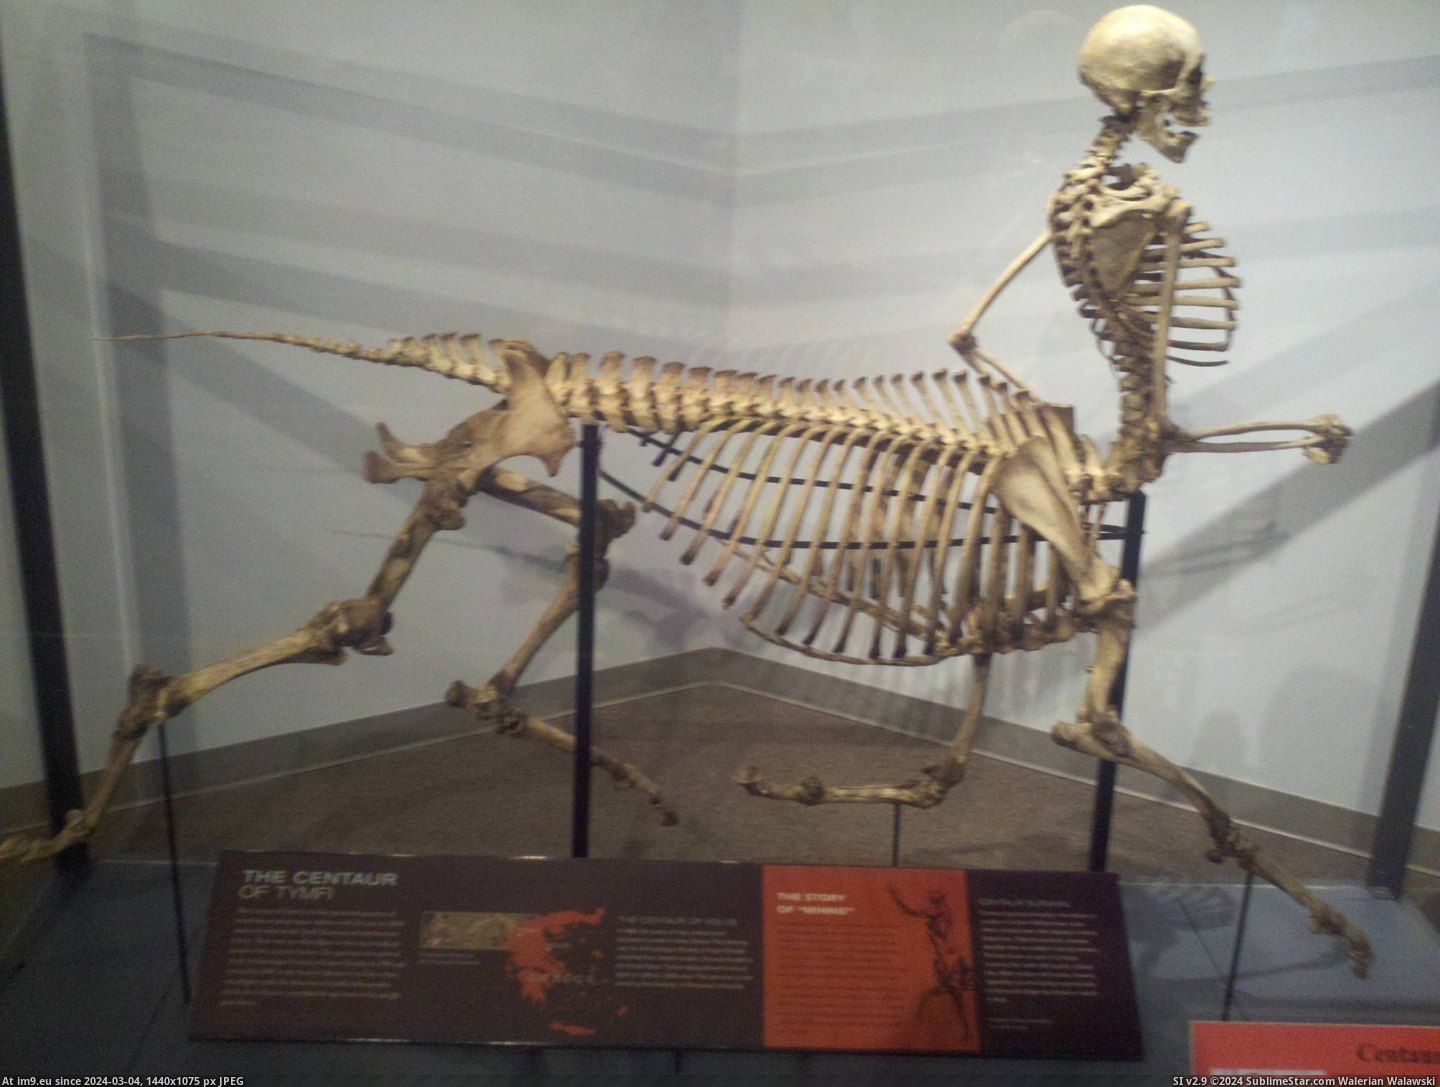 #Life #Museum #Skeleton #Centaur #Wild #Local [Pics] Centaur skeleton at my local wild life museum. Pic. (Obraz z album My r/PICS favs))